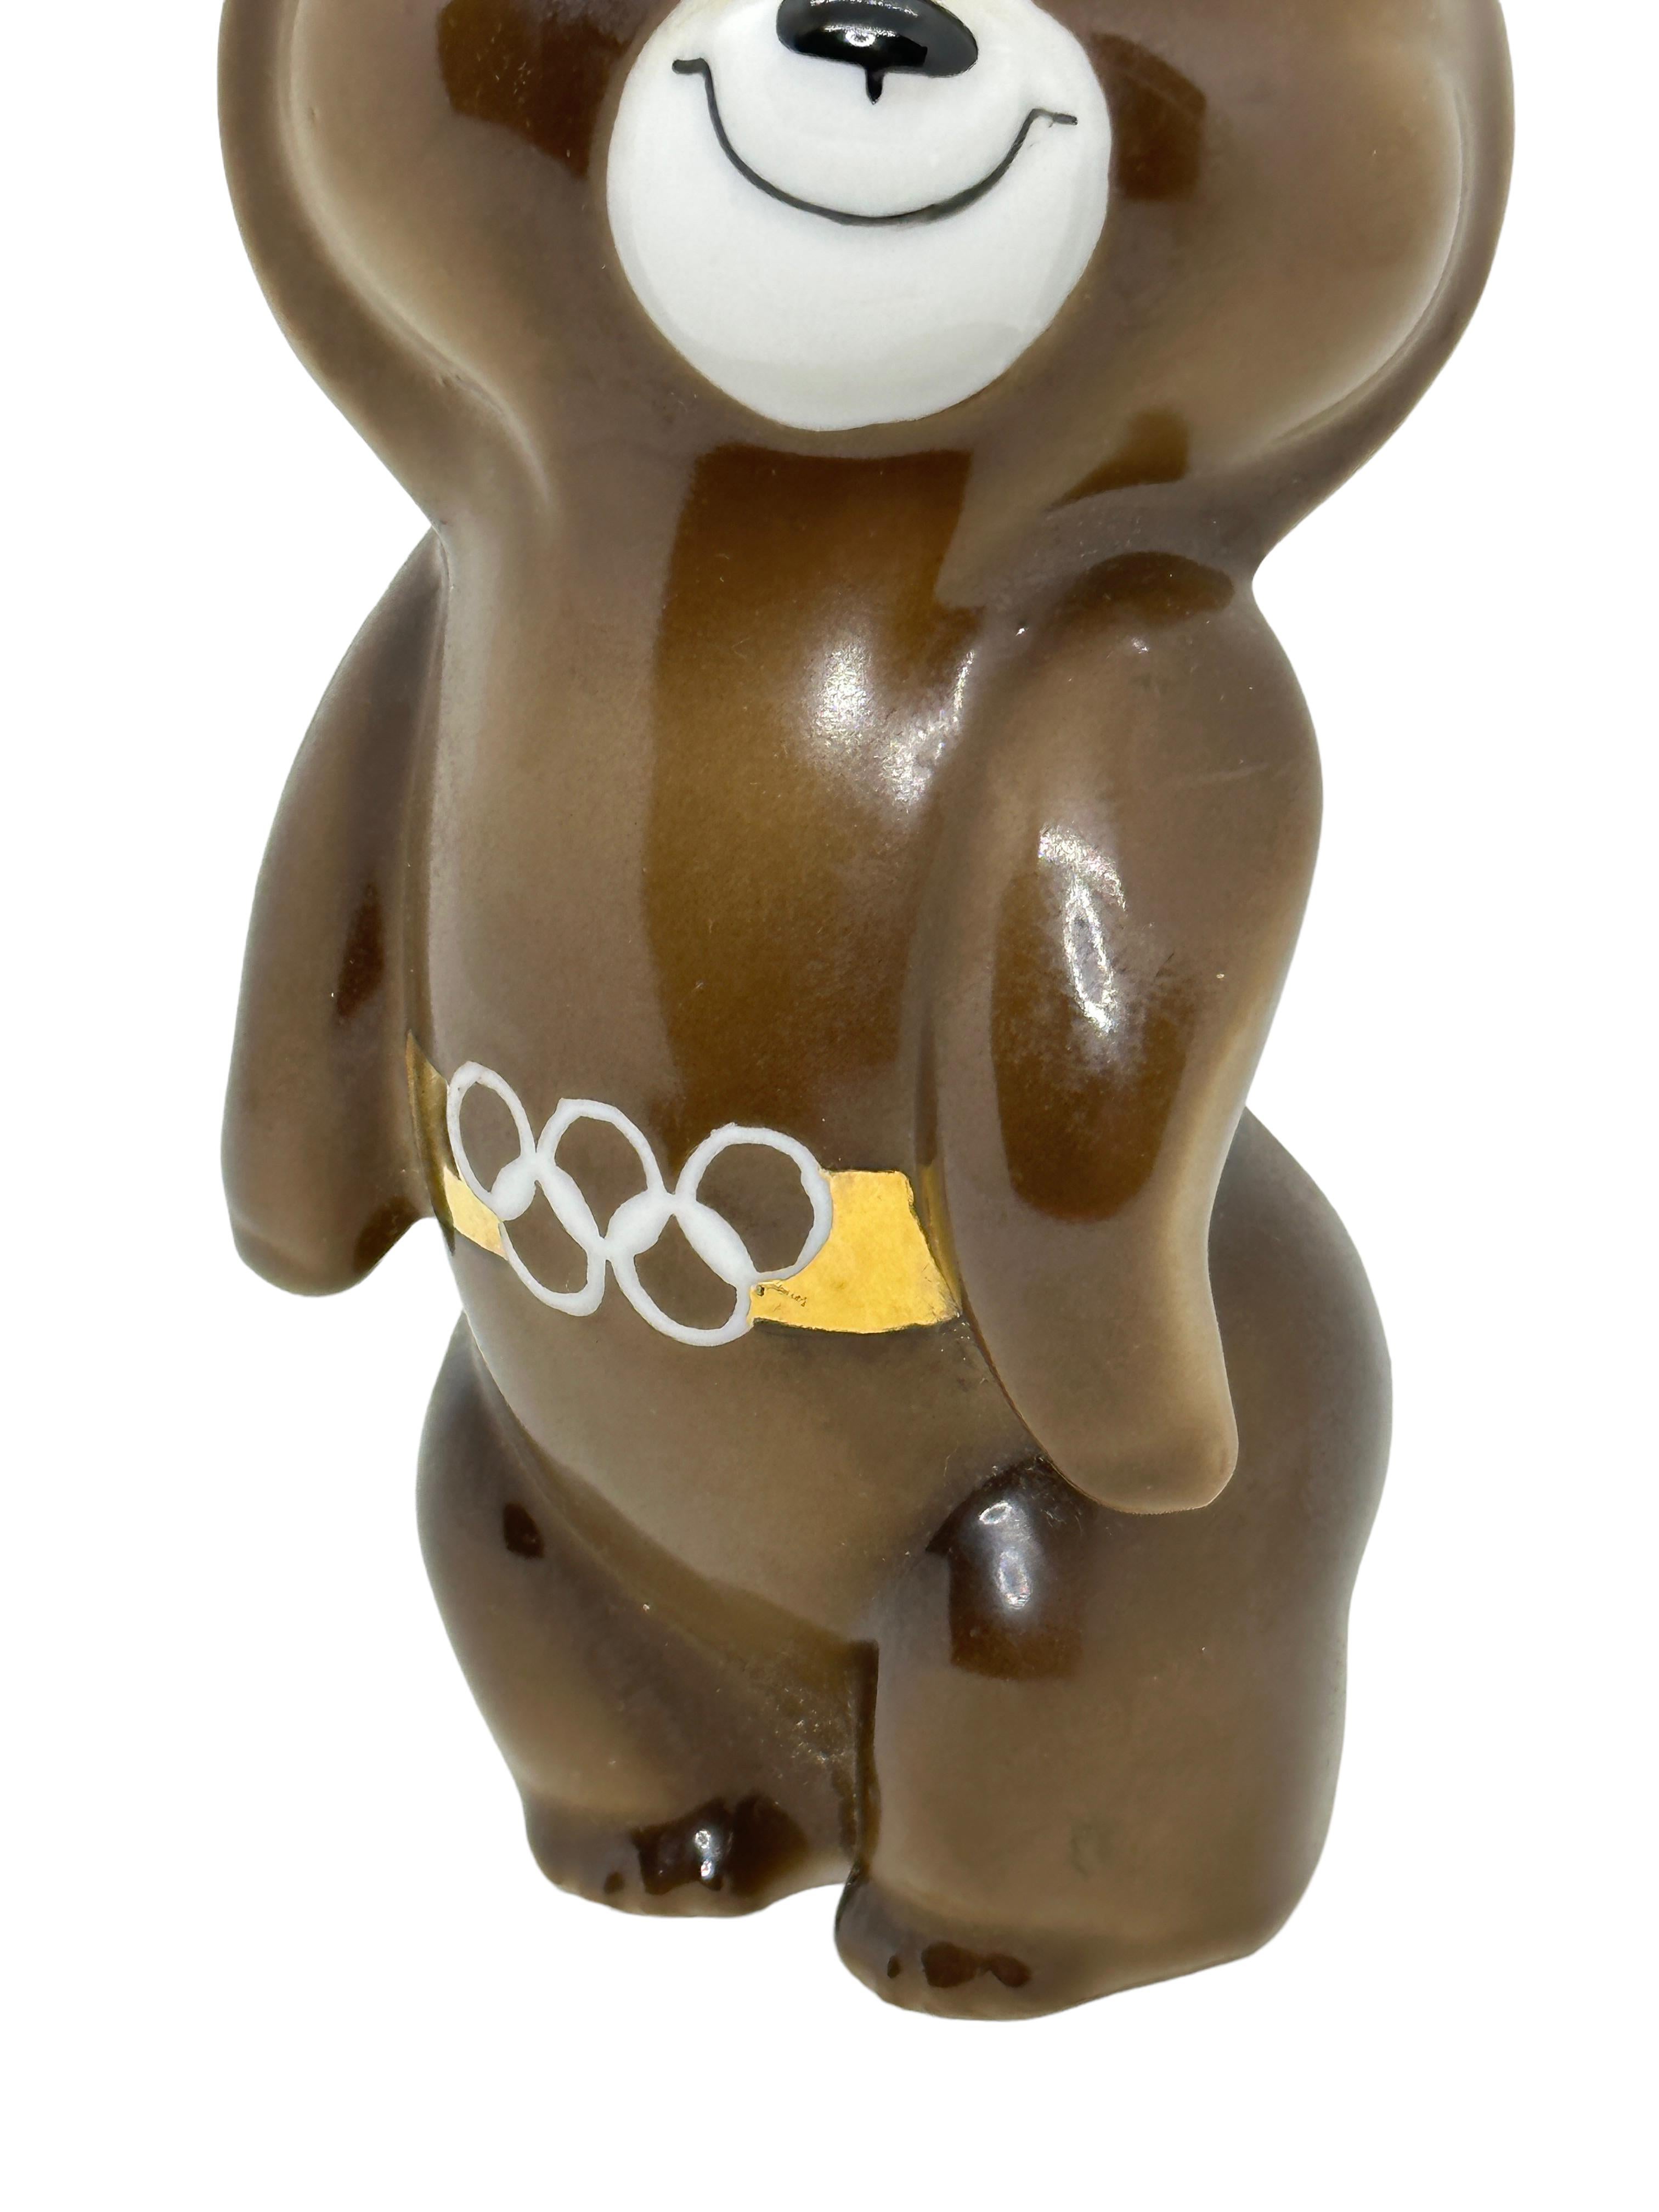 Russian XXII Moscow Olympic Games 1980 Porcelain Mascot Misha Mishka Bear Vintage For Sale